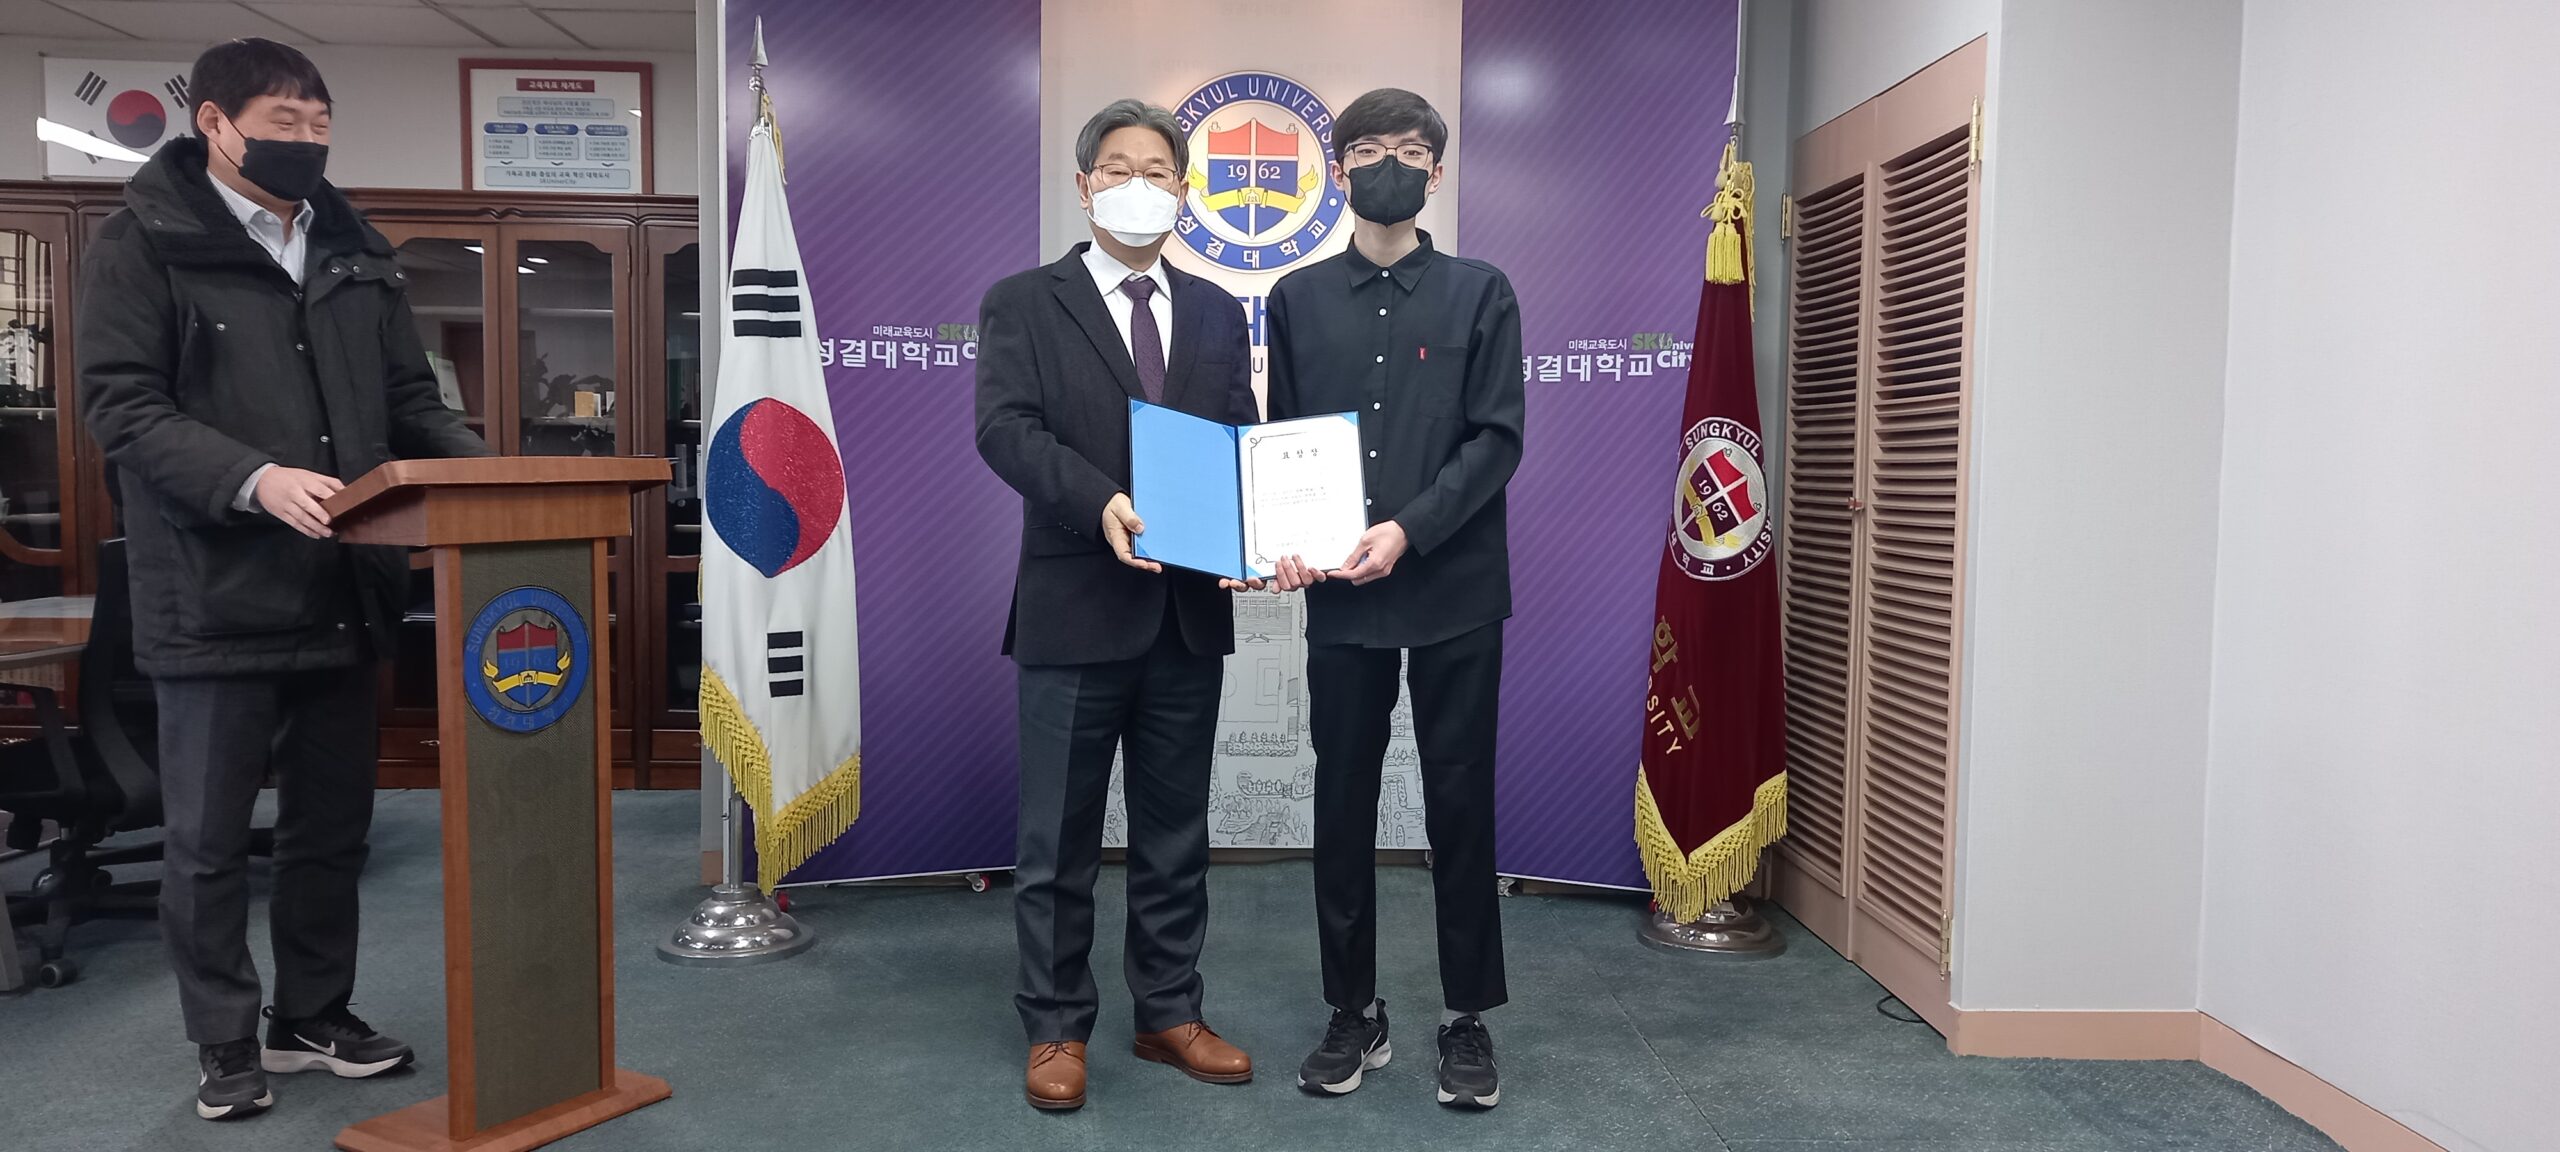 awarded to Sungkyul University President